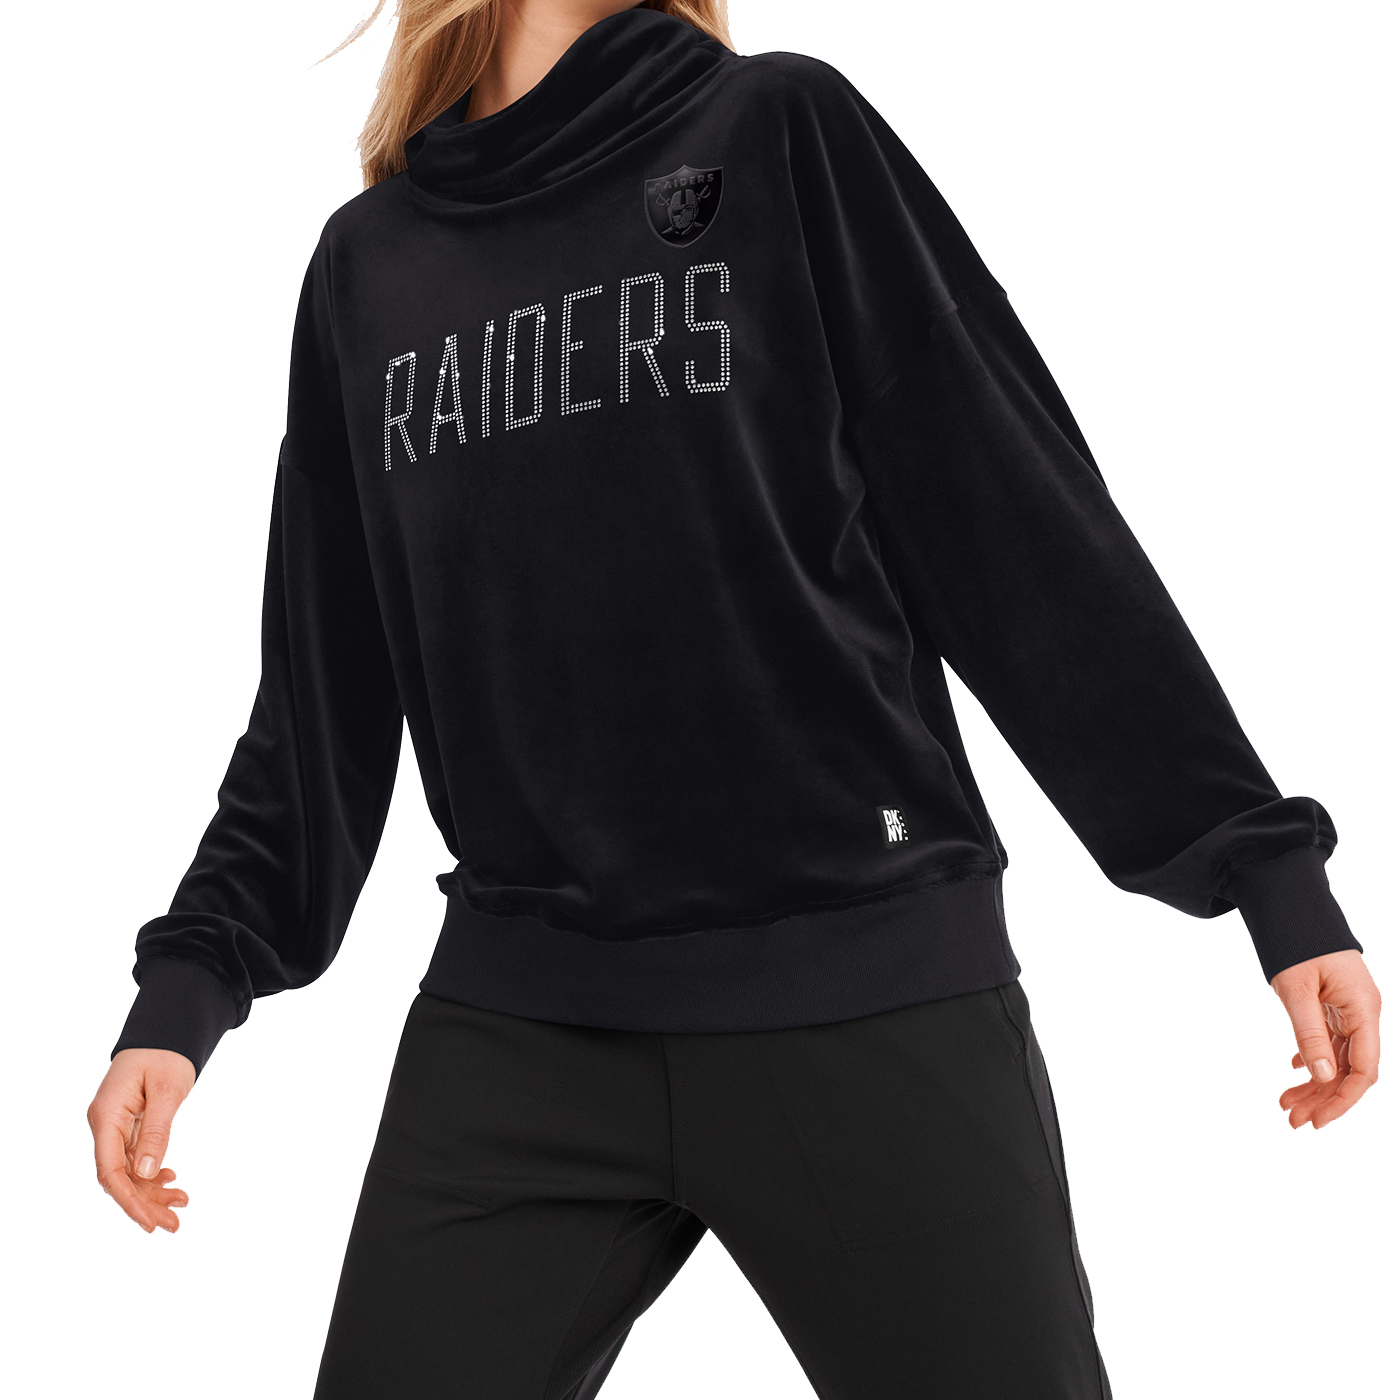 Las Vegas Raiders Men's Sweatsuit Football Sweatshirt Pants